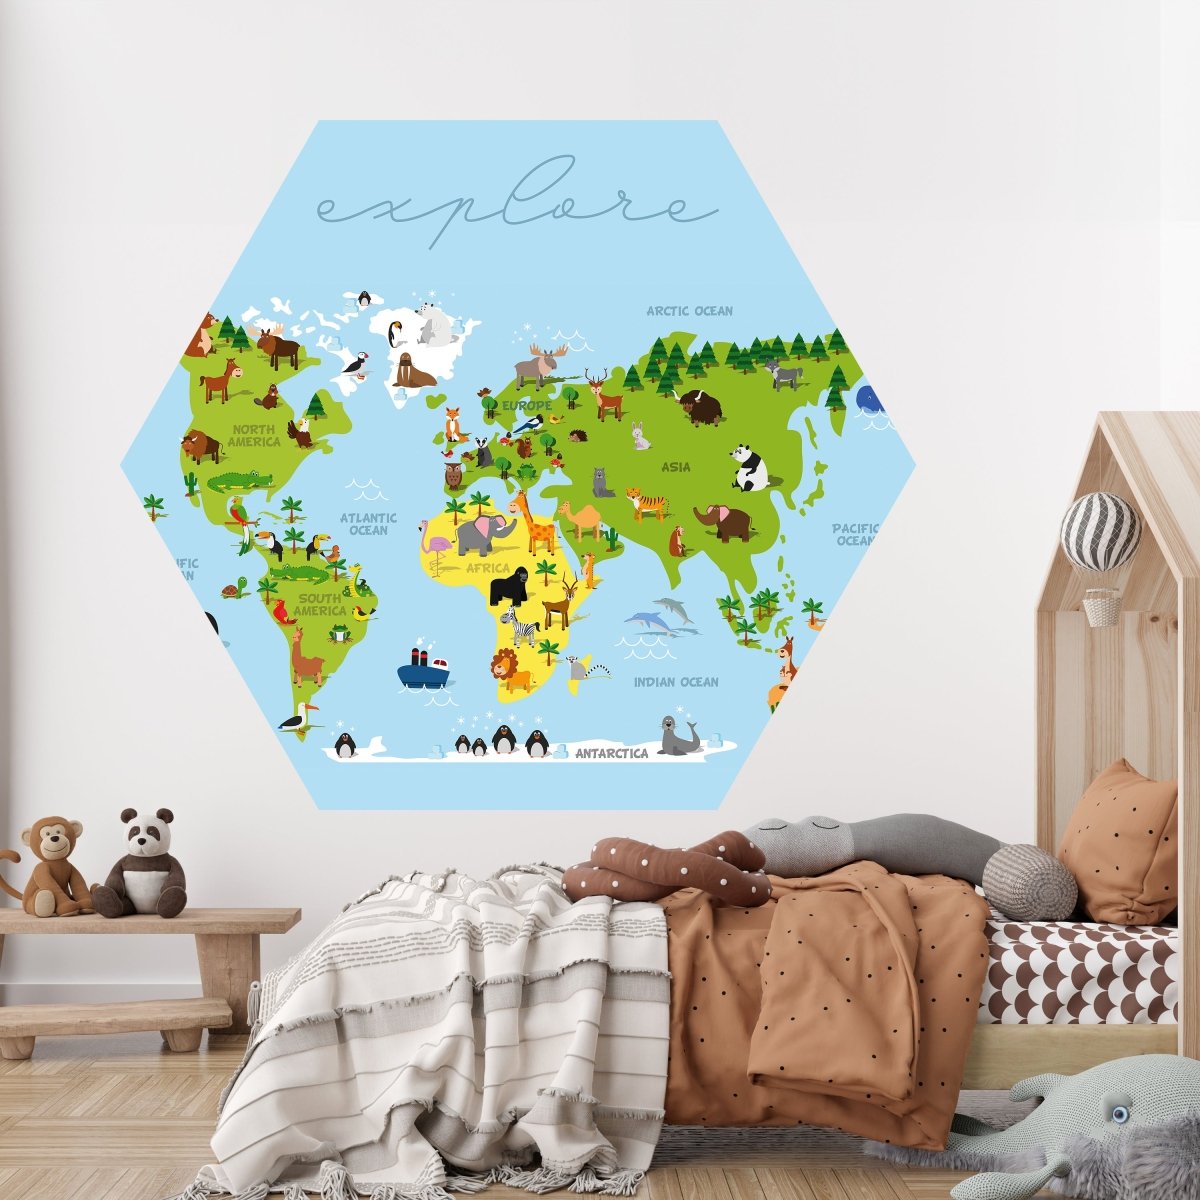 Hexagon-Fototapete Weltkarte mit Tieren M0011 - Bild 2